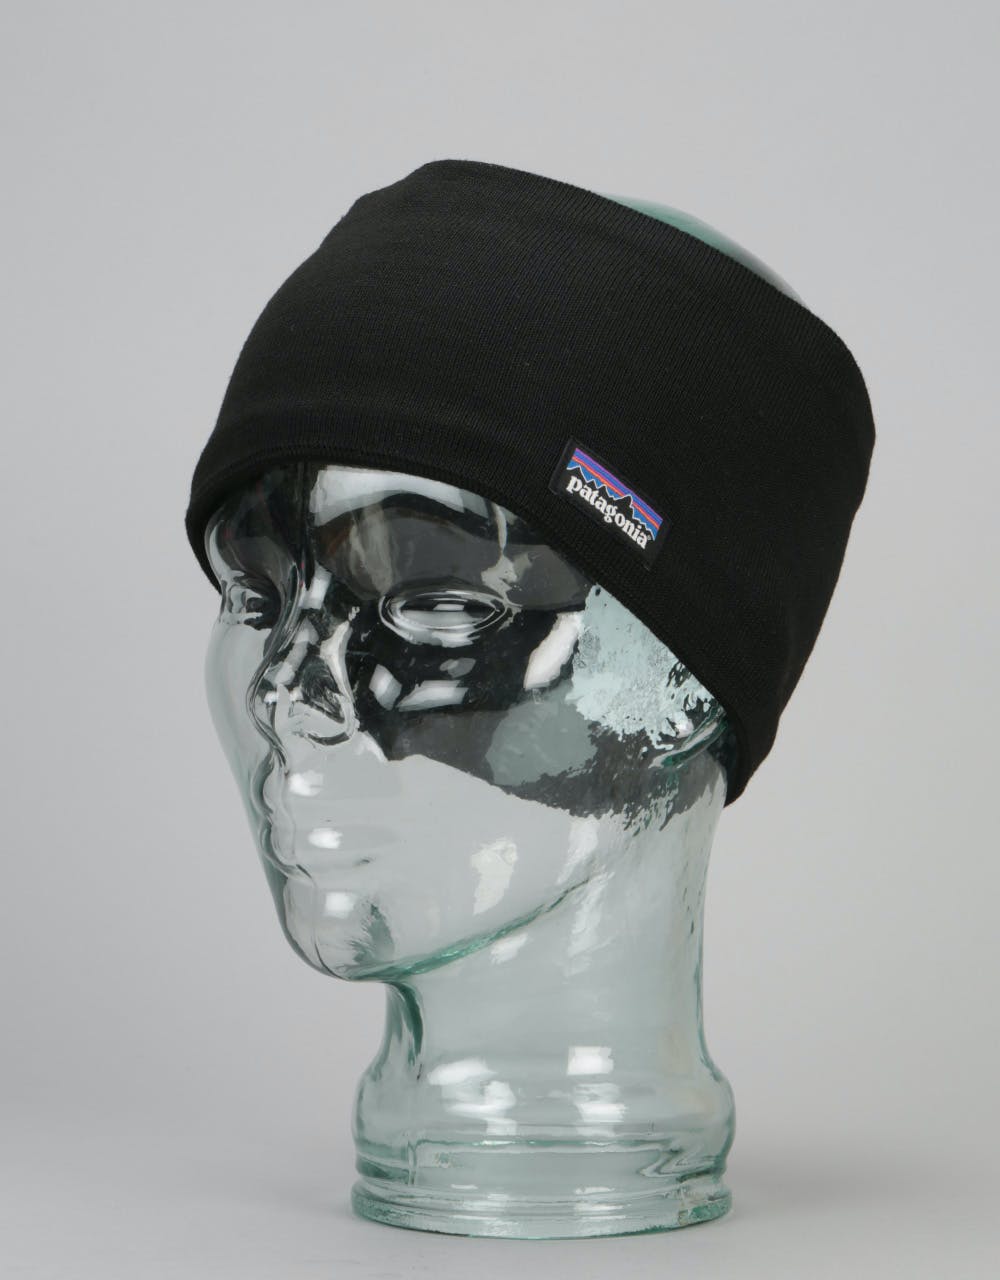 Patagonia Lined Knit Headband - Black